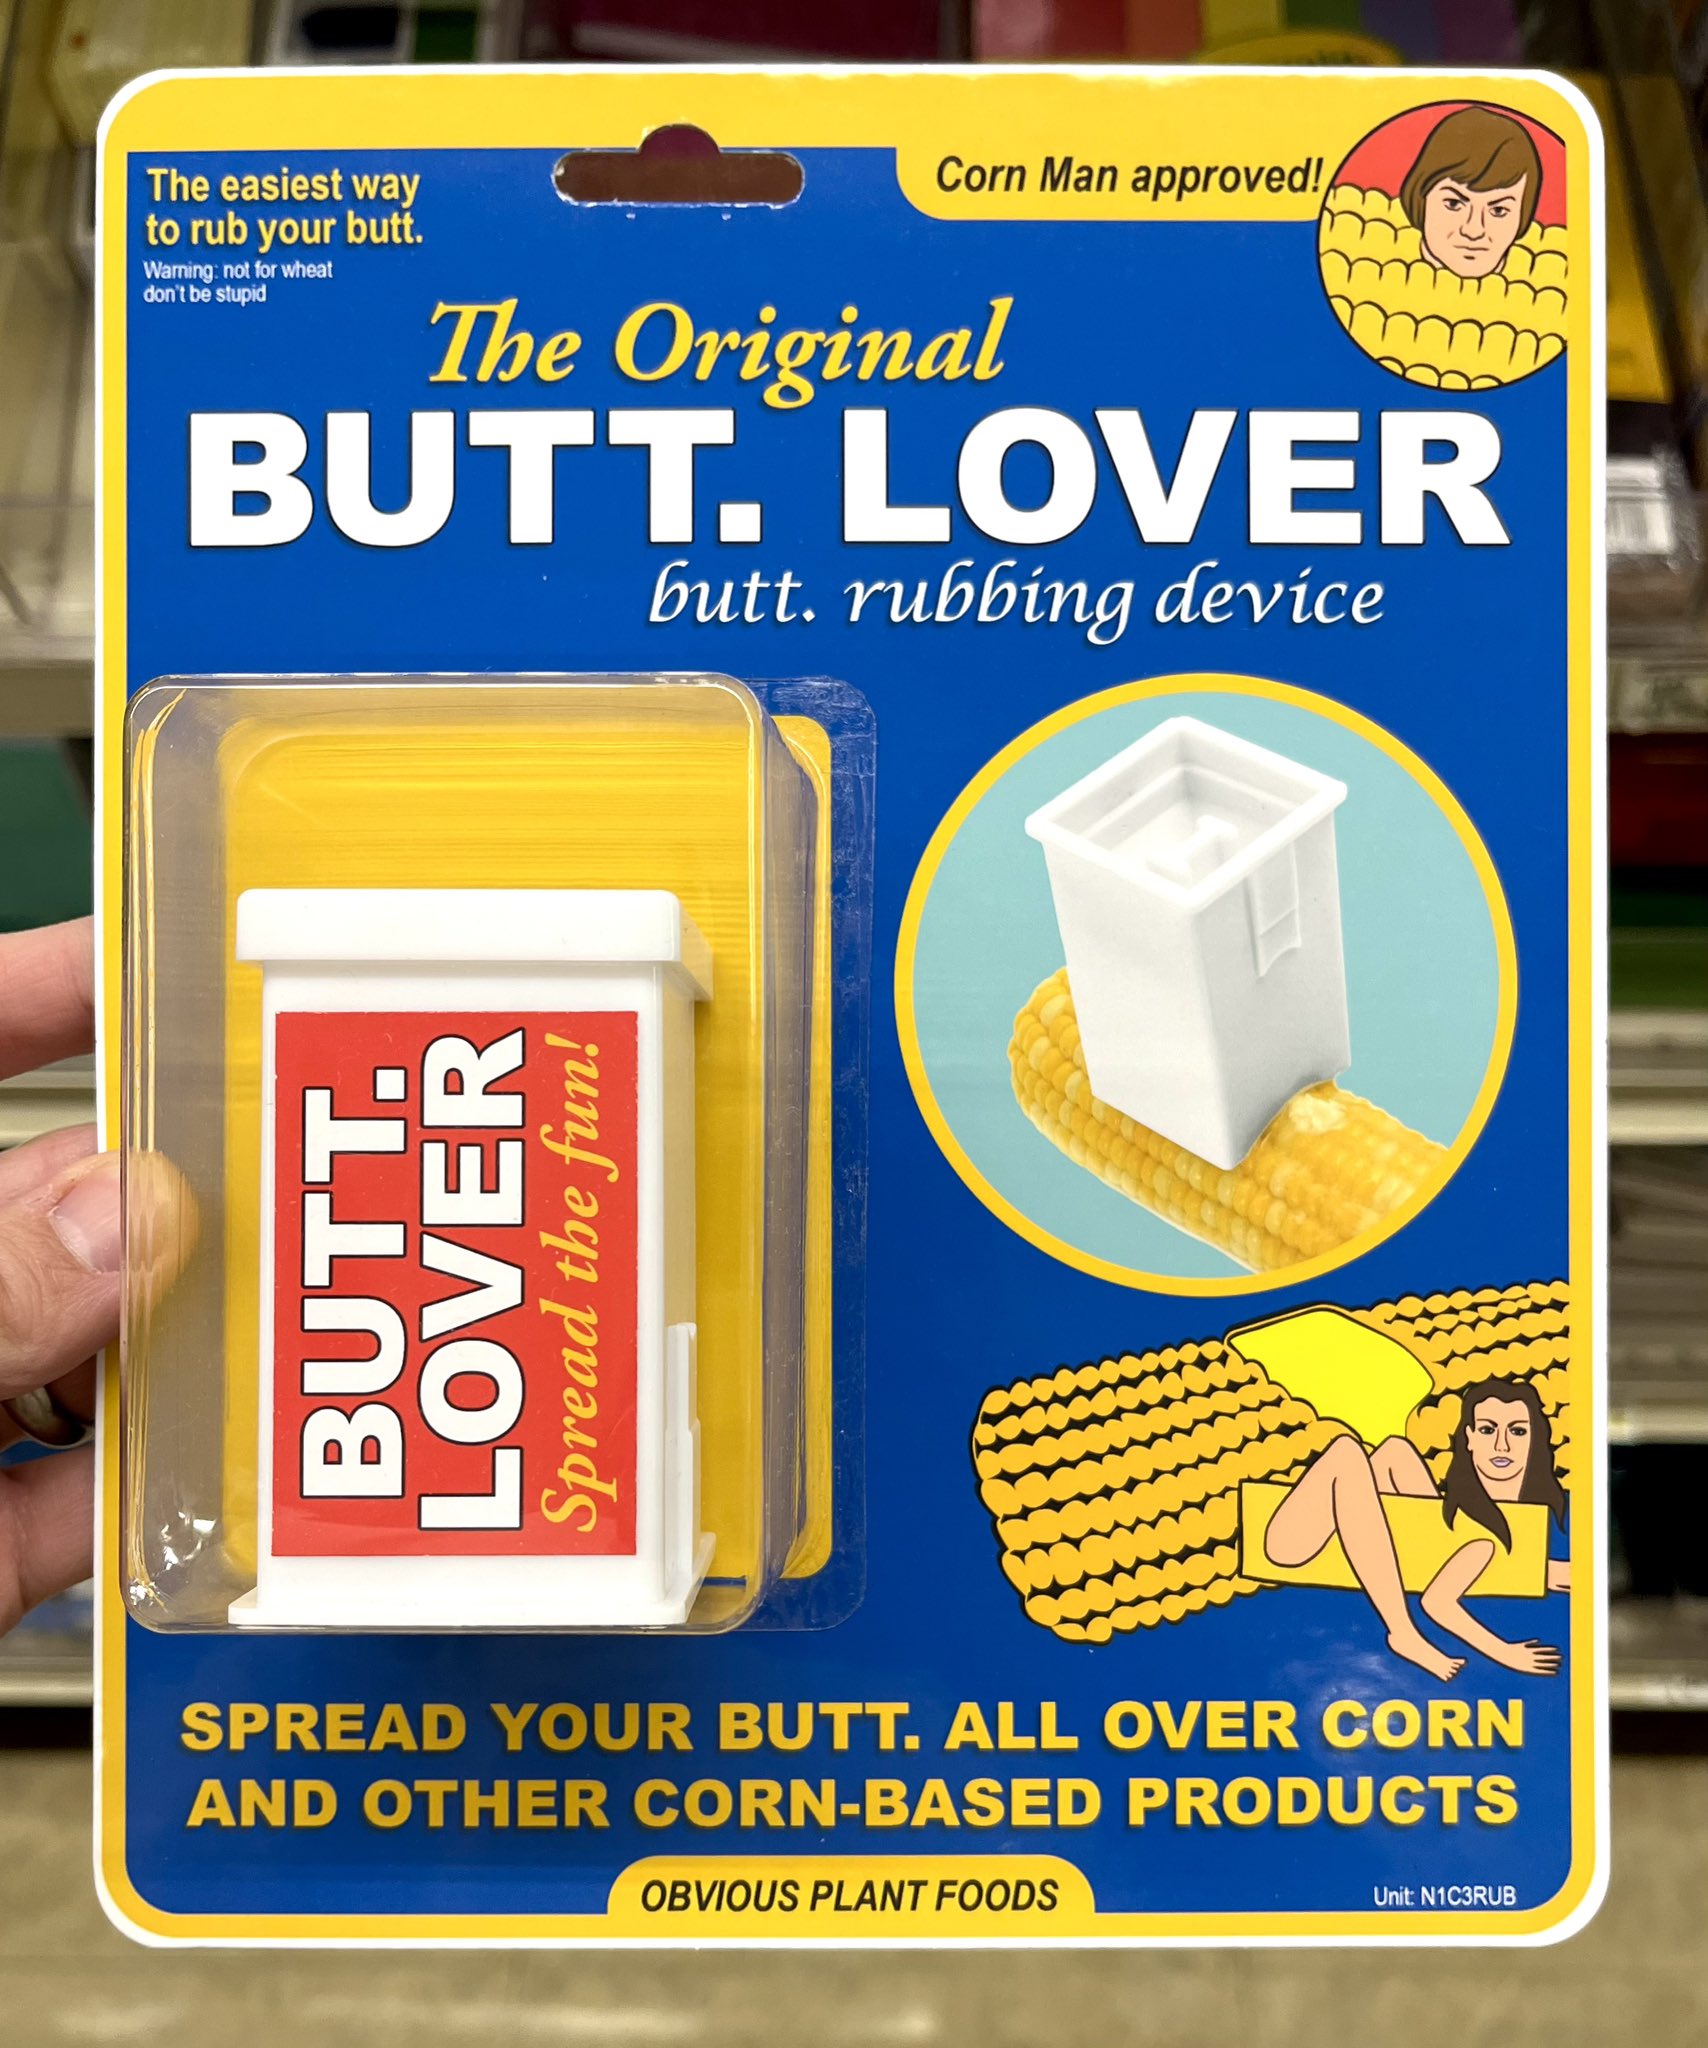 The Butt. Lover